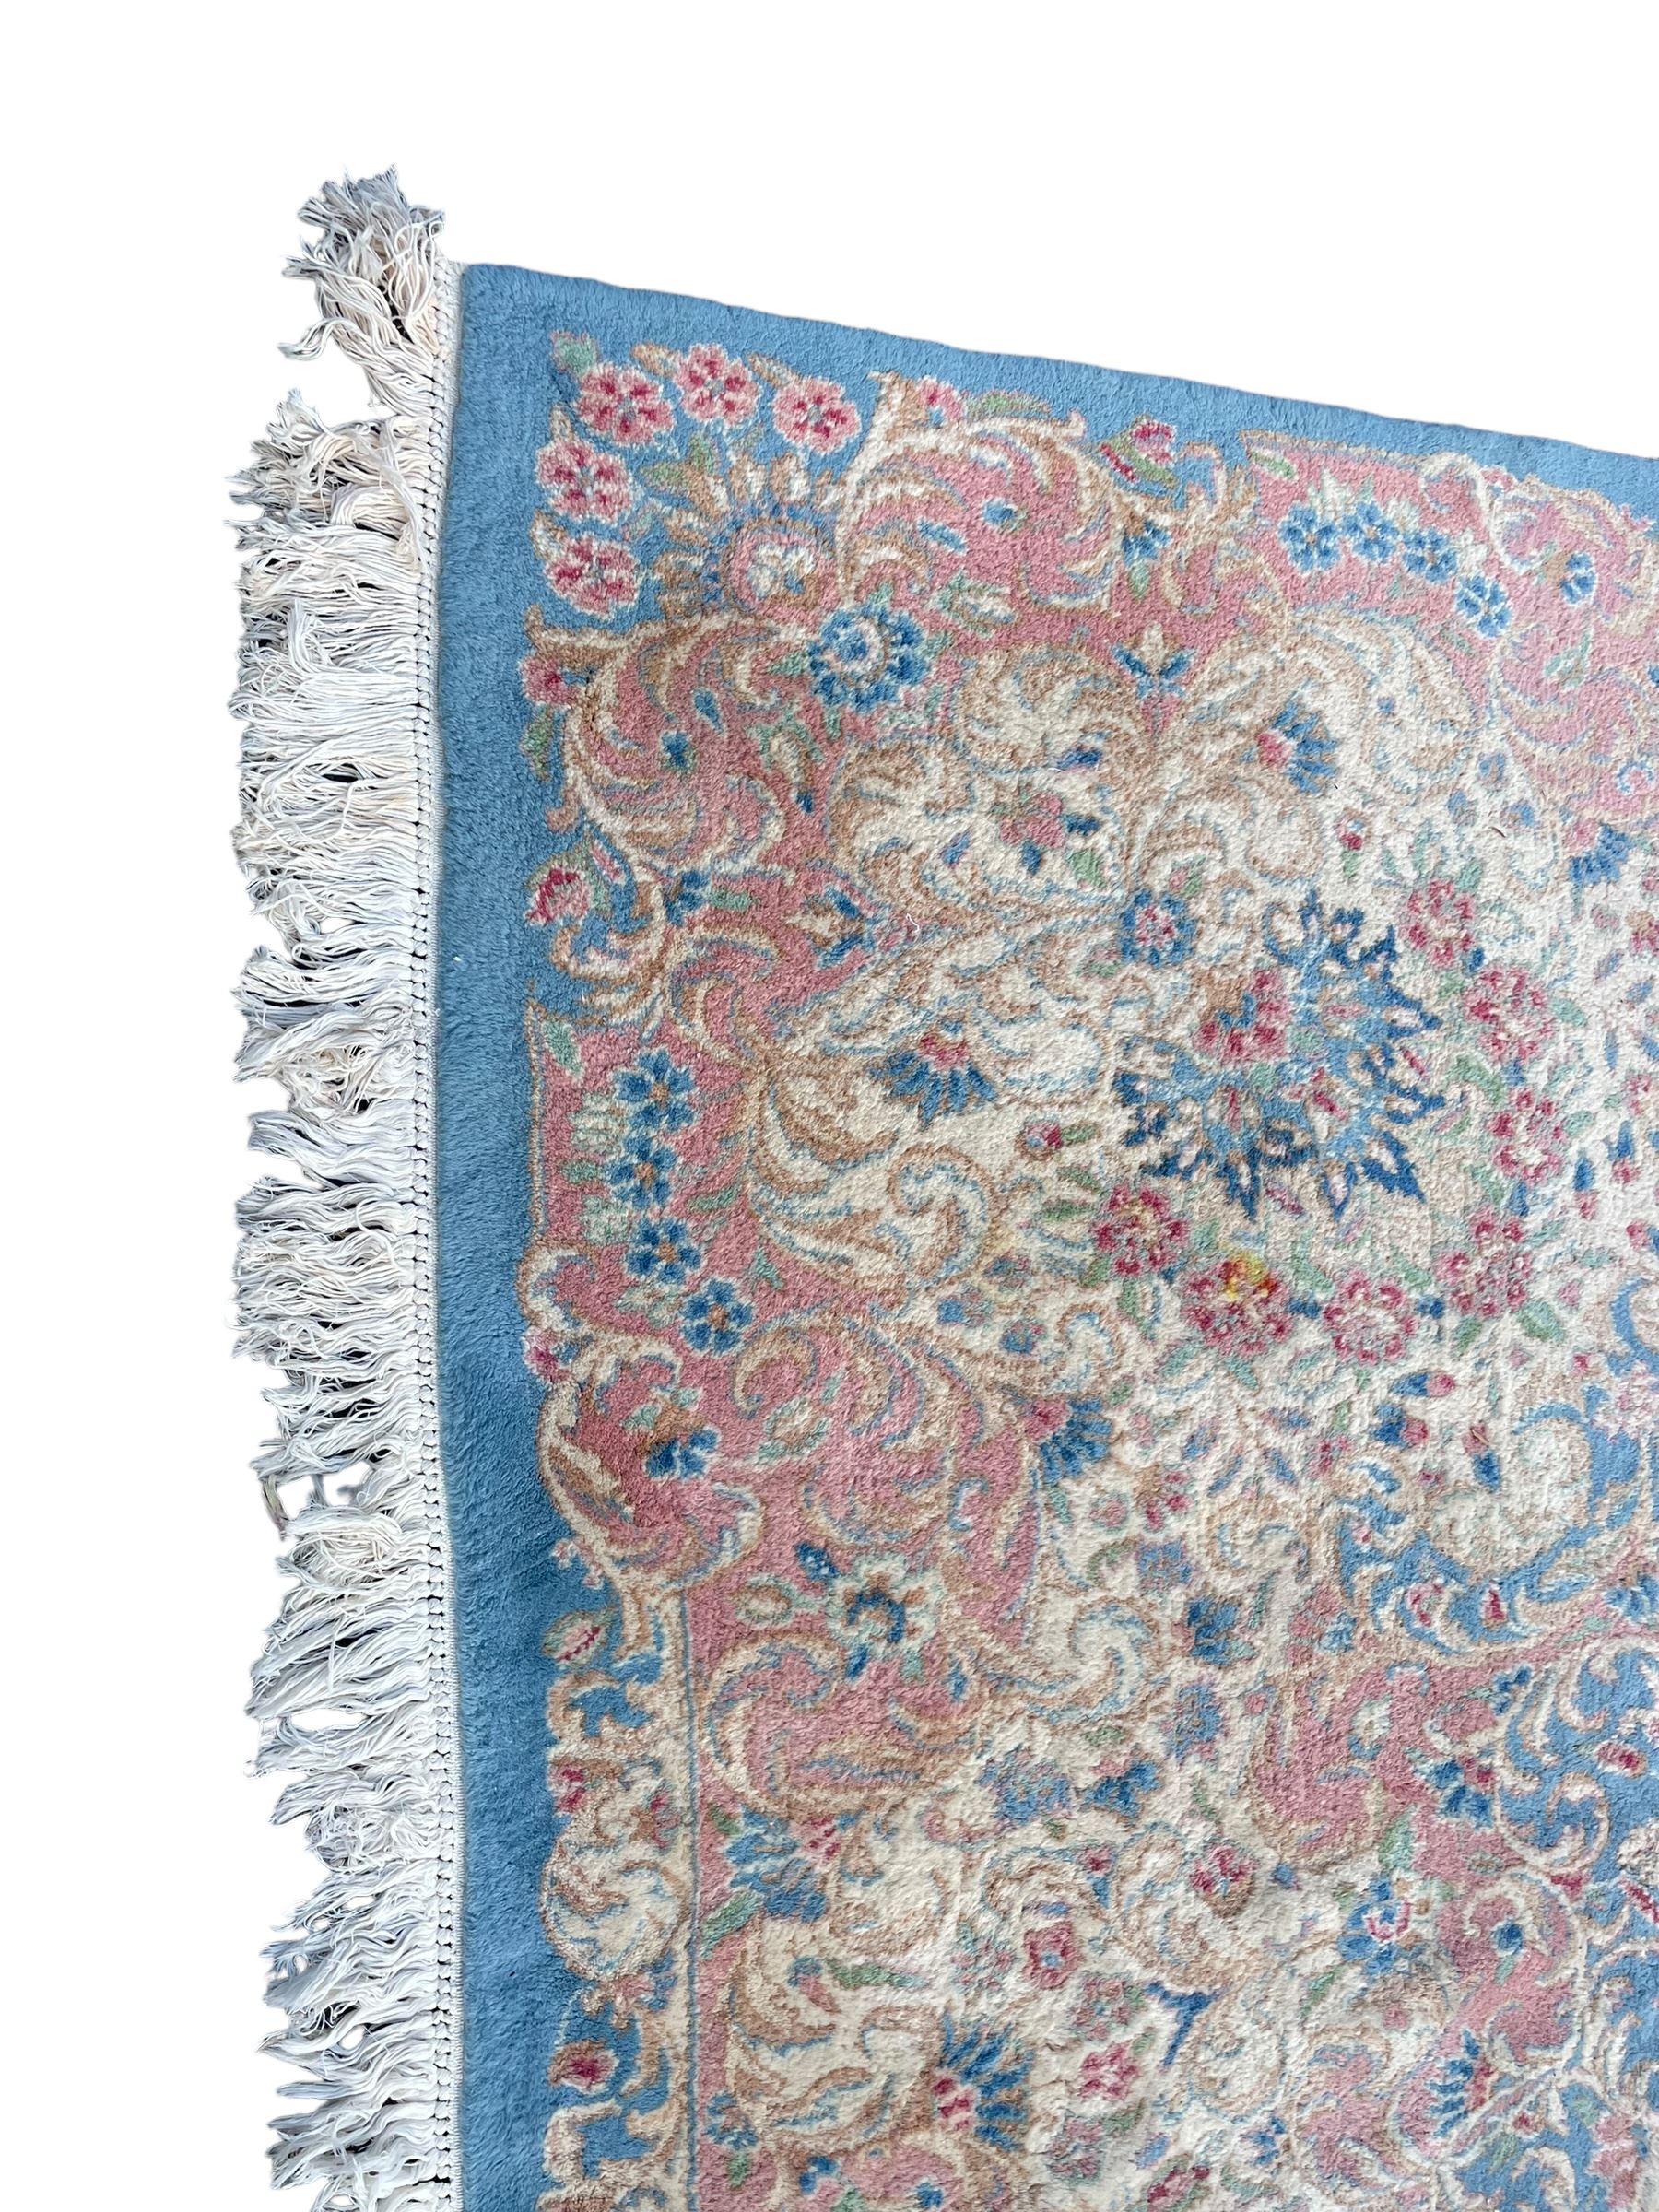 Large Persian design carpet - Image 4 of 8